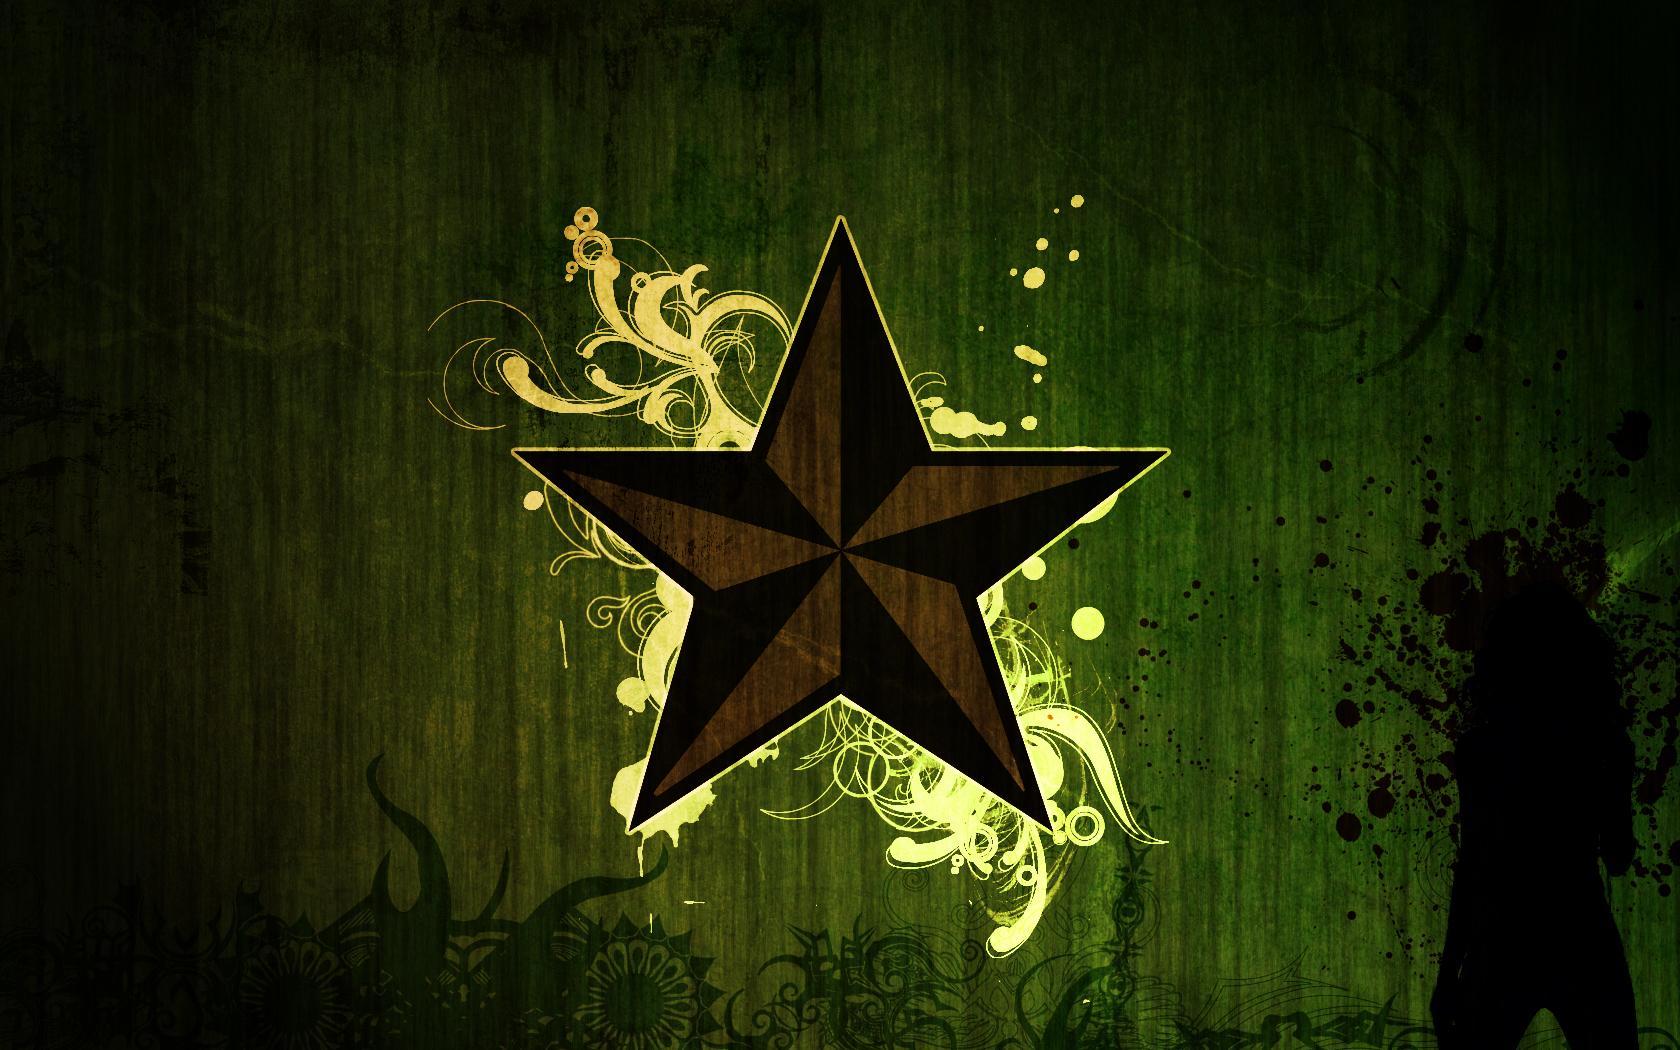 Abstract Green And Black Star Wallpaper Download Abstract Wallpaper